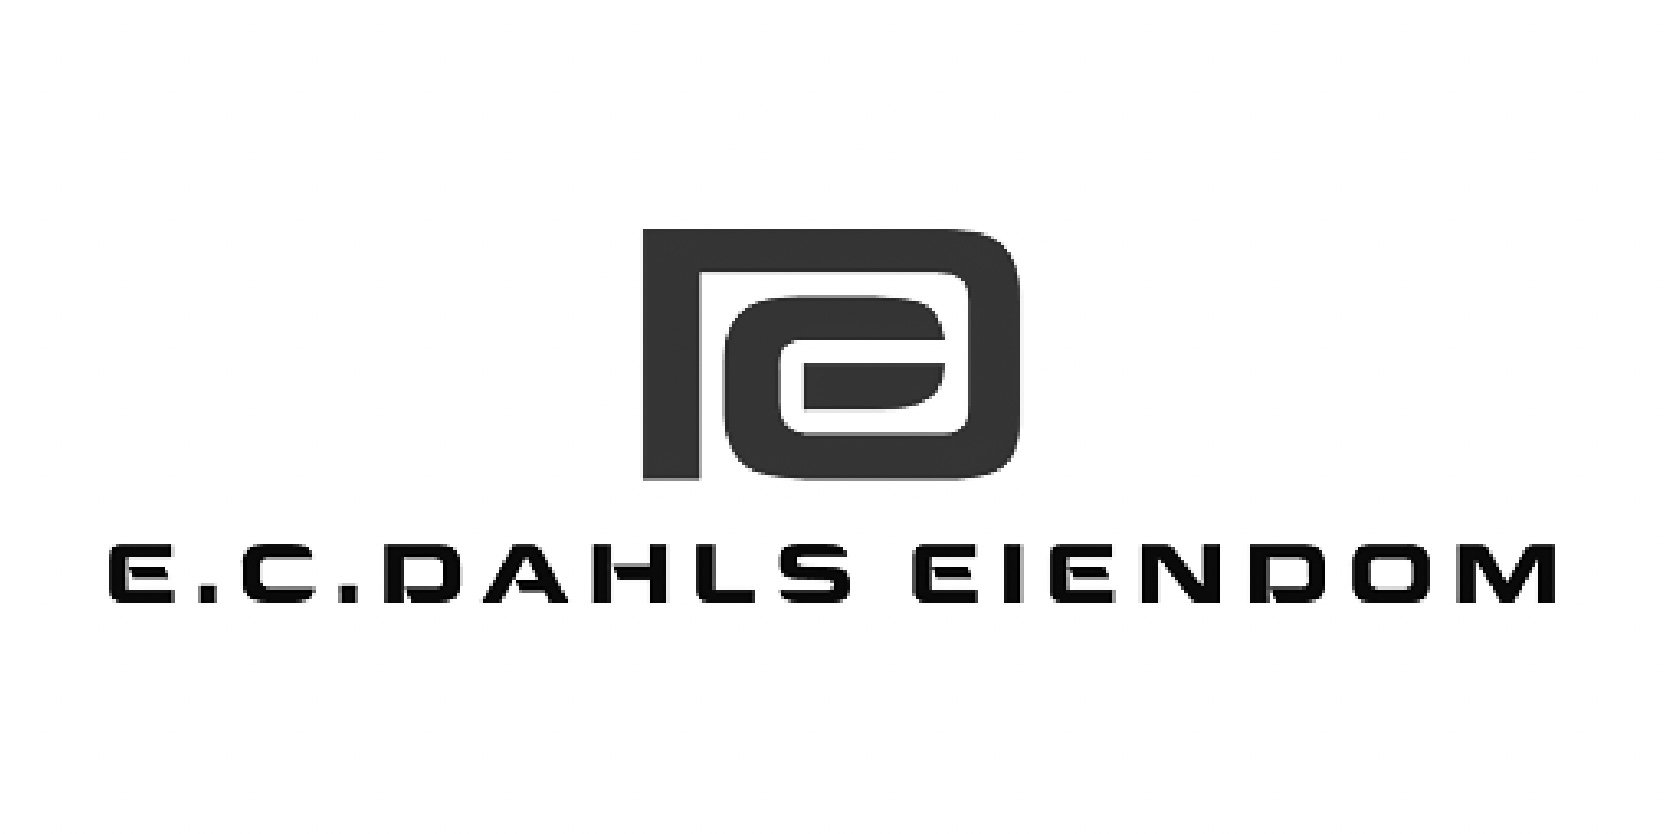 EC Dahls Eiendom_edited